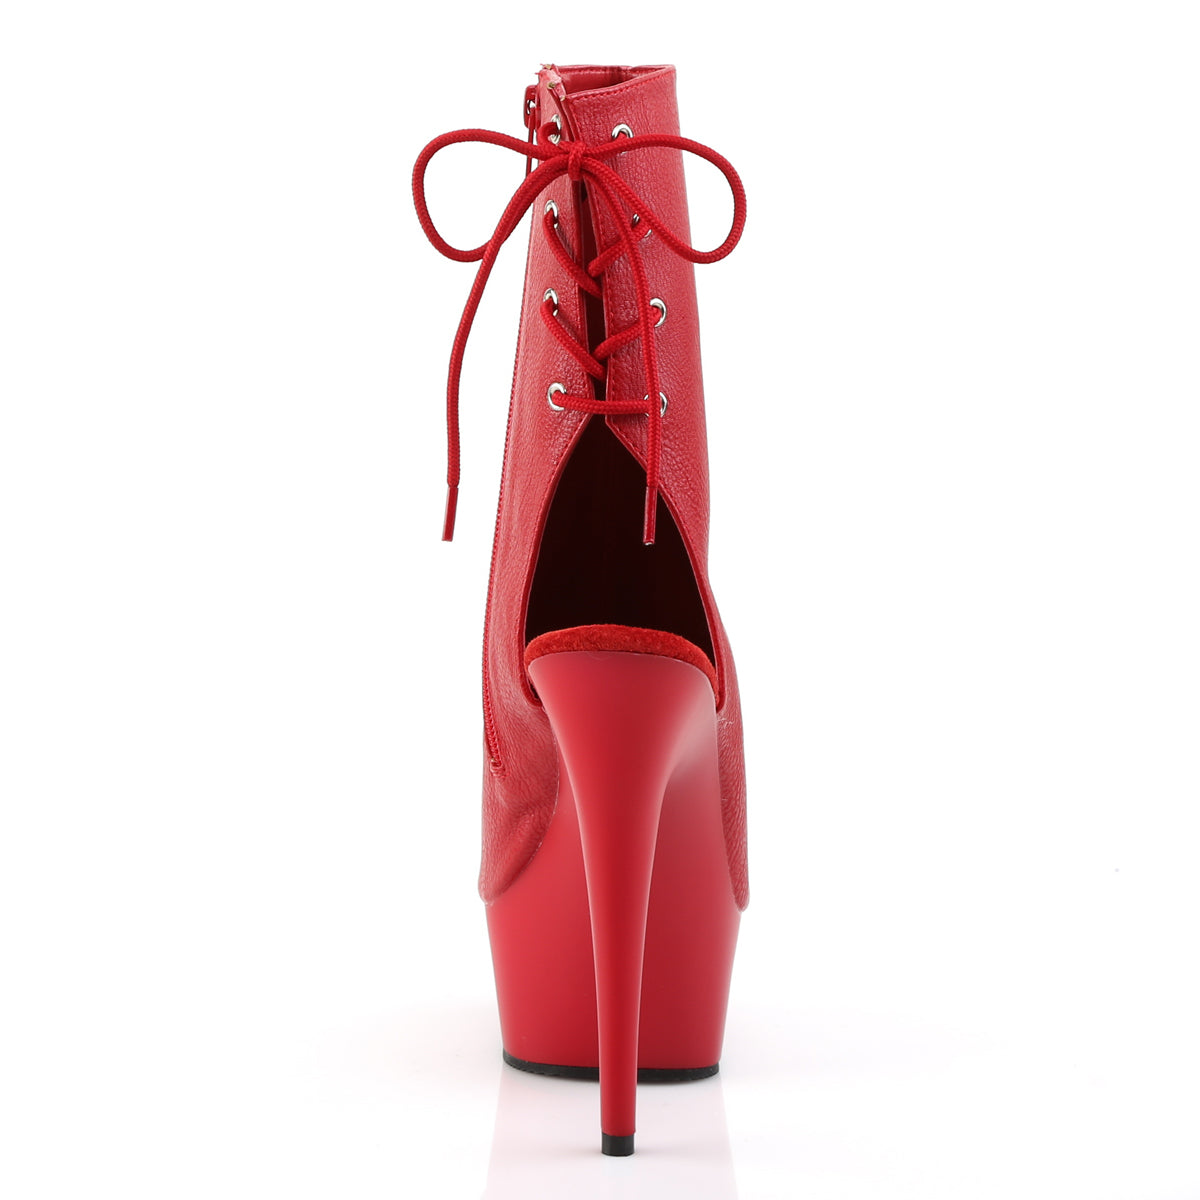 DELIGHT-1018 Pleaser 6 Inch Heel Red Pole Dancing Platforms-Pleaser- Sexy Shoes Fetish Footwear